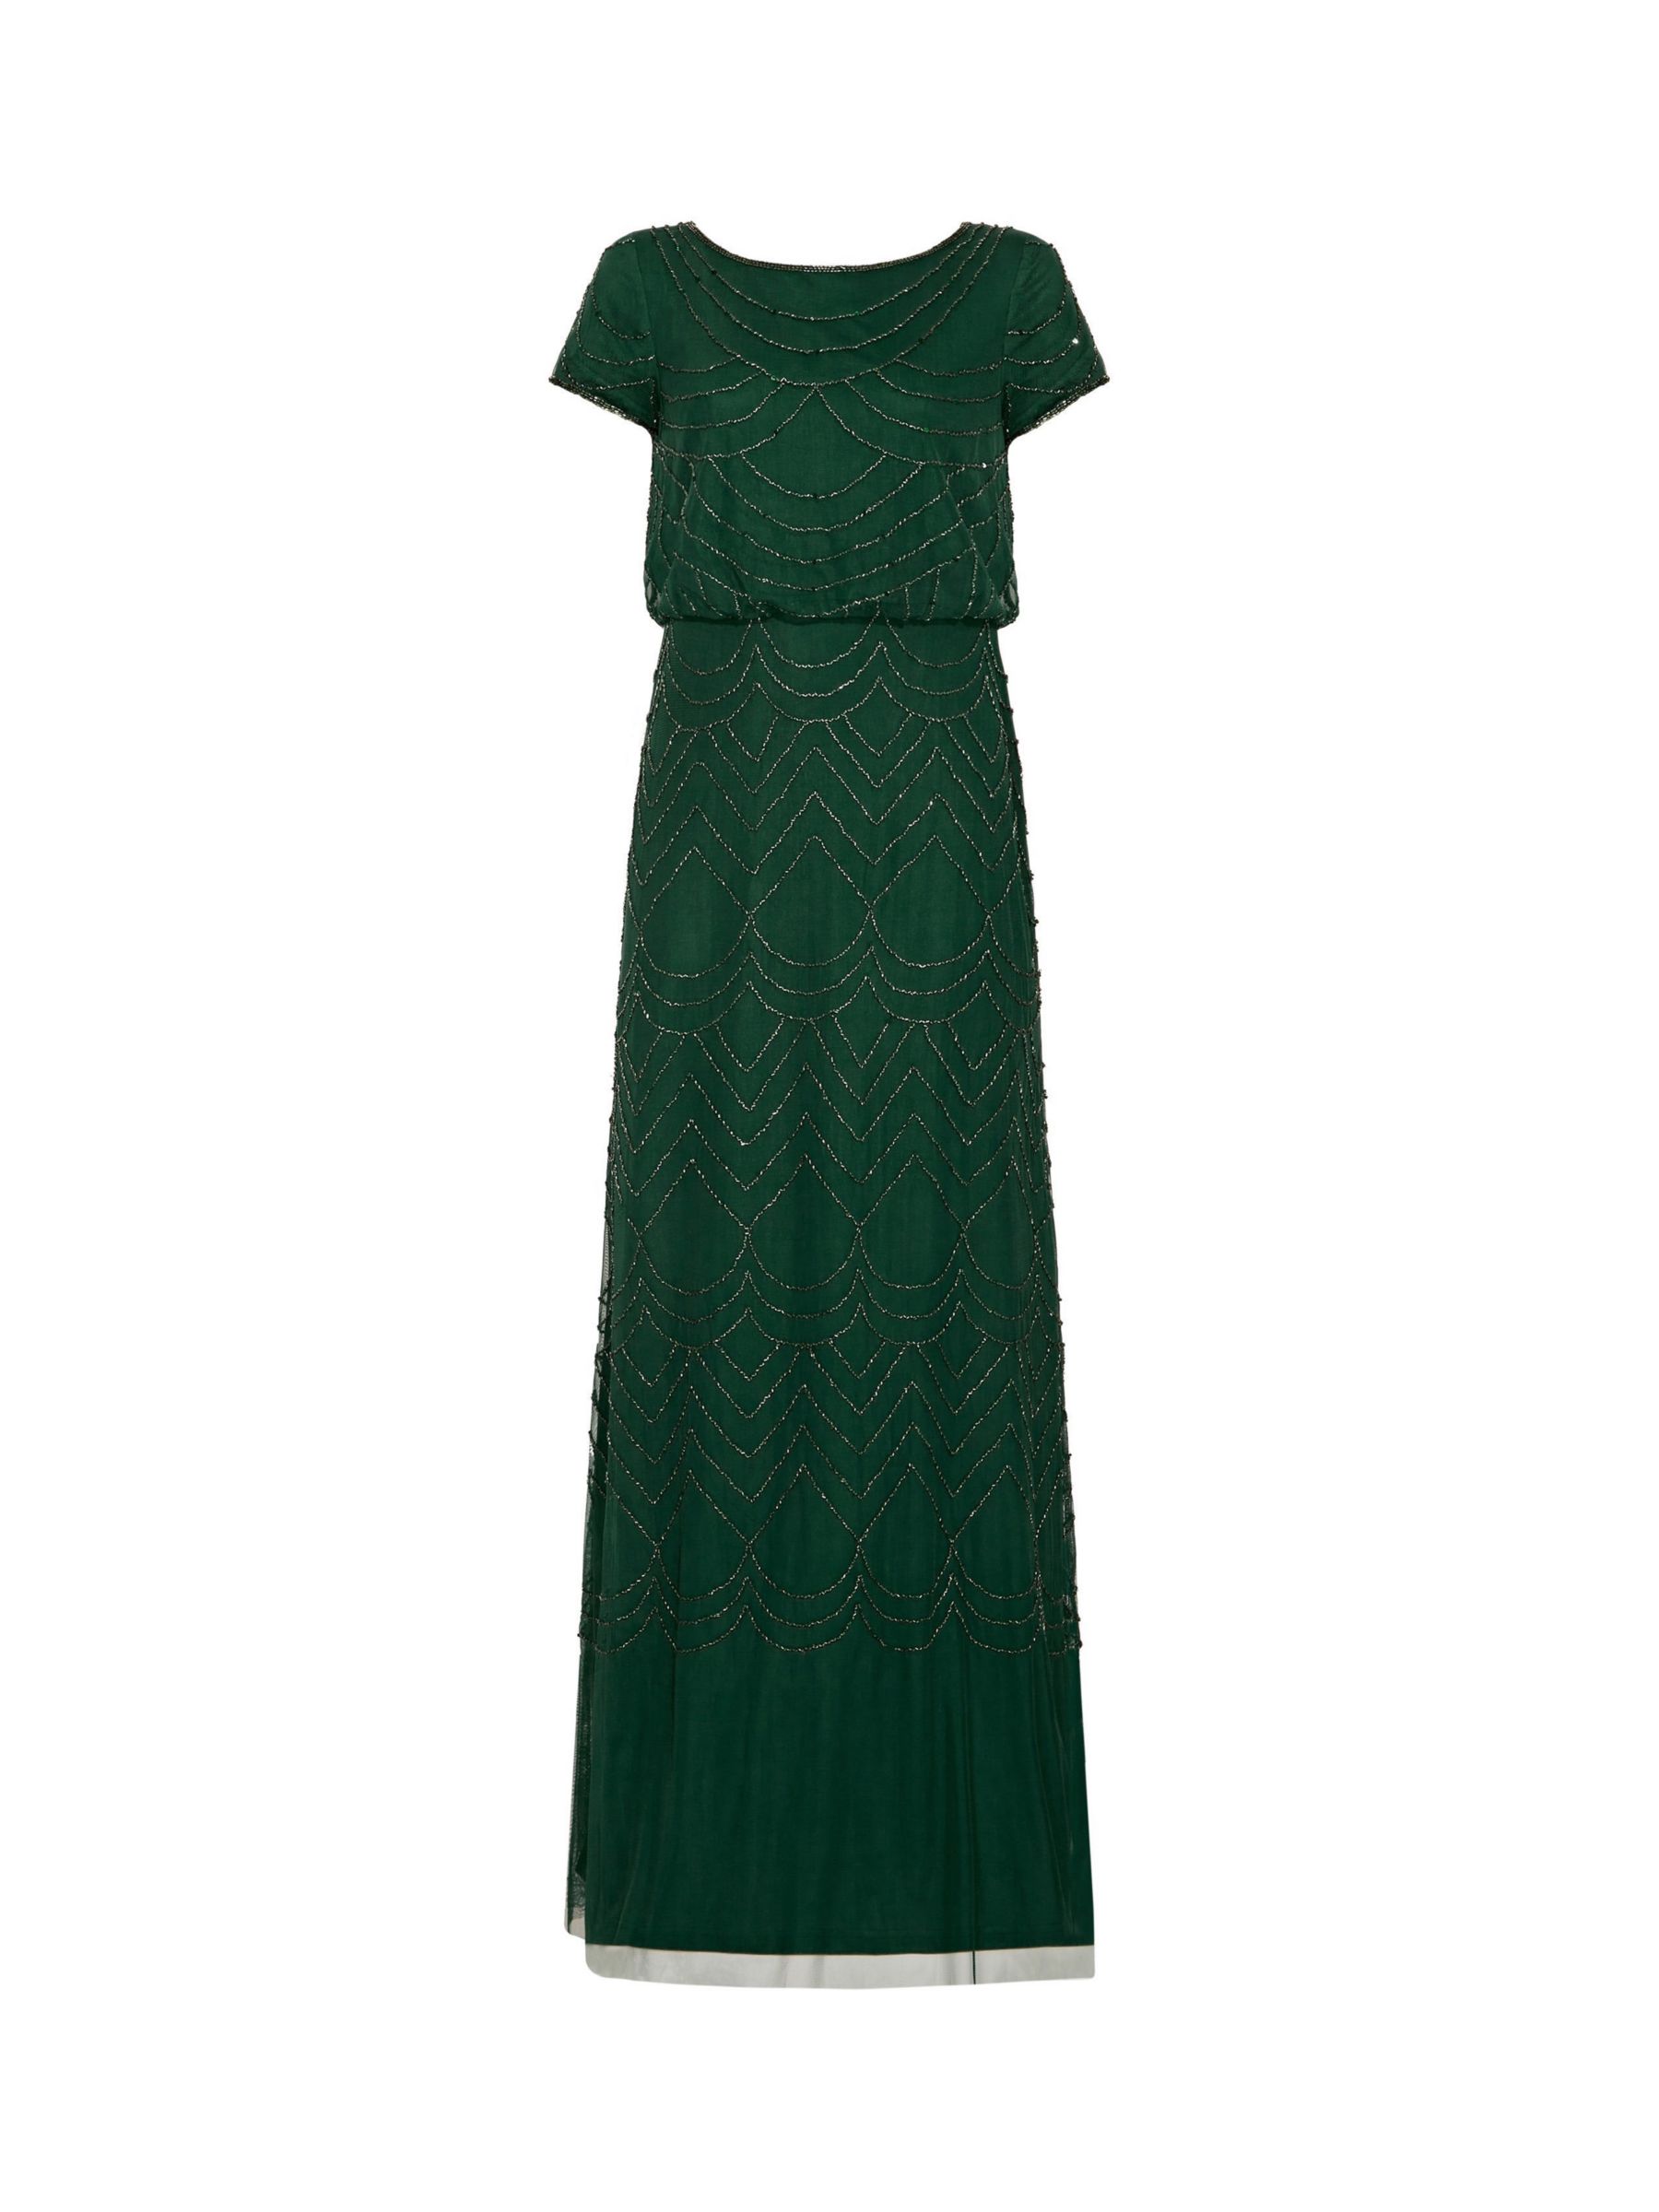 Adrianna Papell Blouson Beaded Evening Maxi Dress, Dusty Emerald, 6